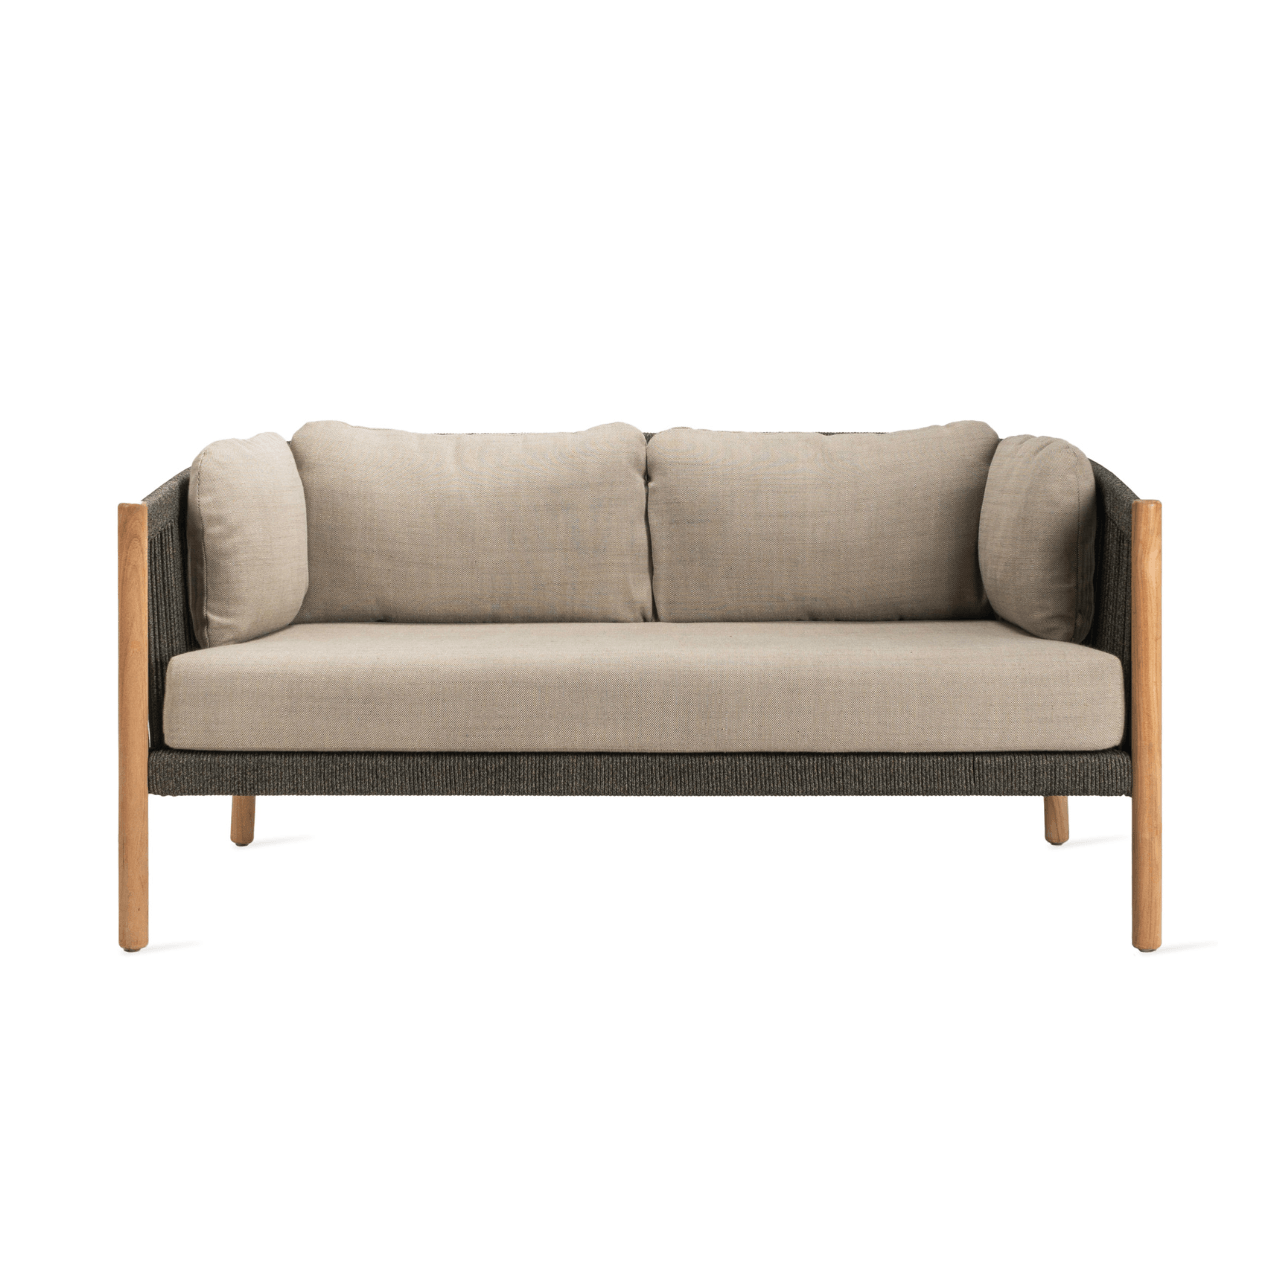 Lento 2-Seater Sofa lifestyle image